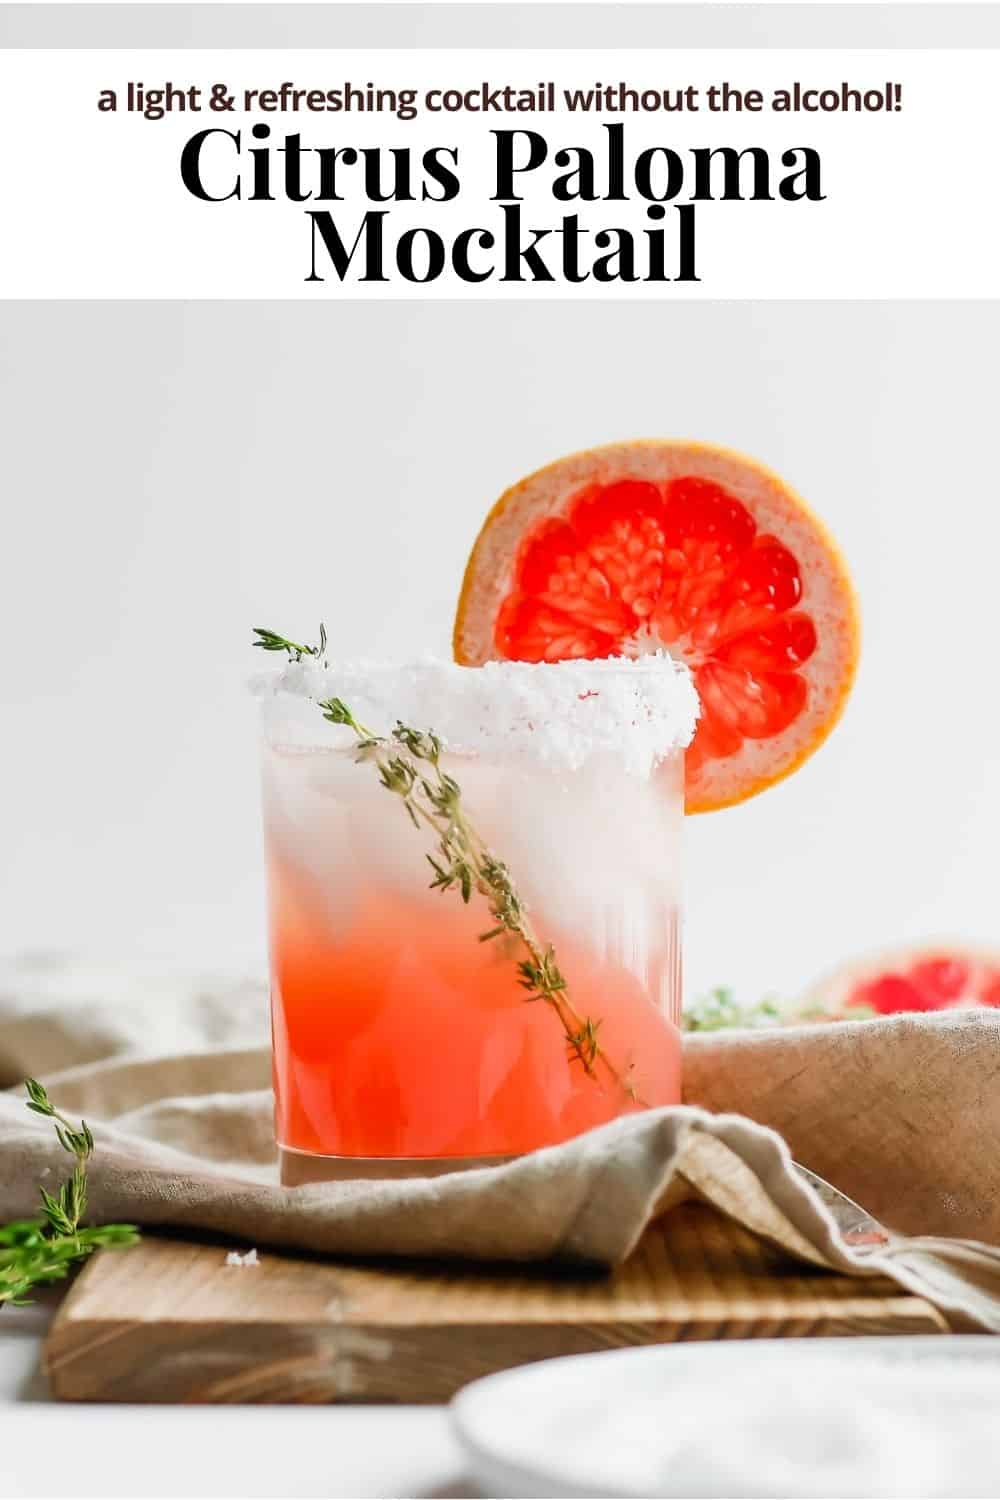 Refreshing Paloma Cocktail Recipe